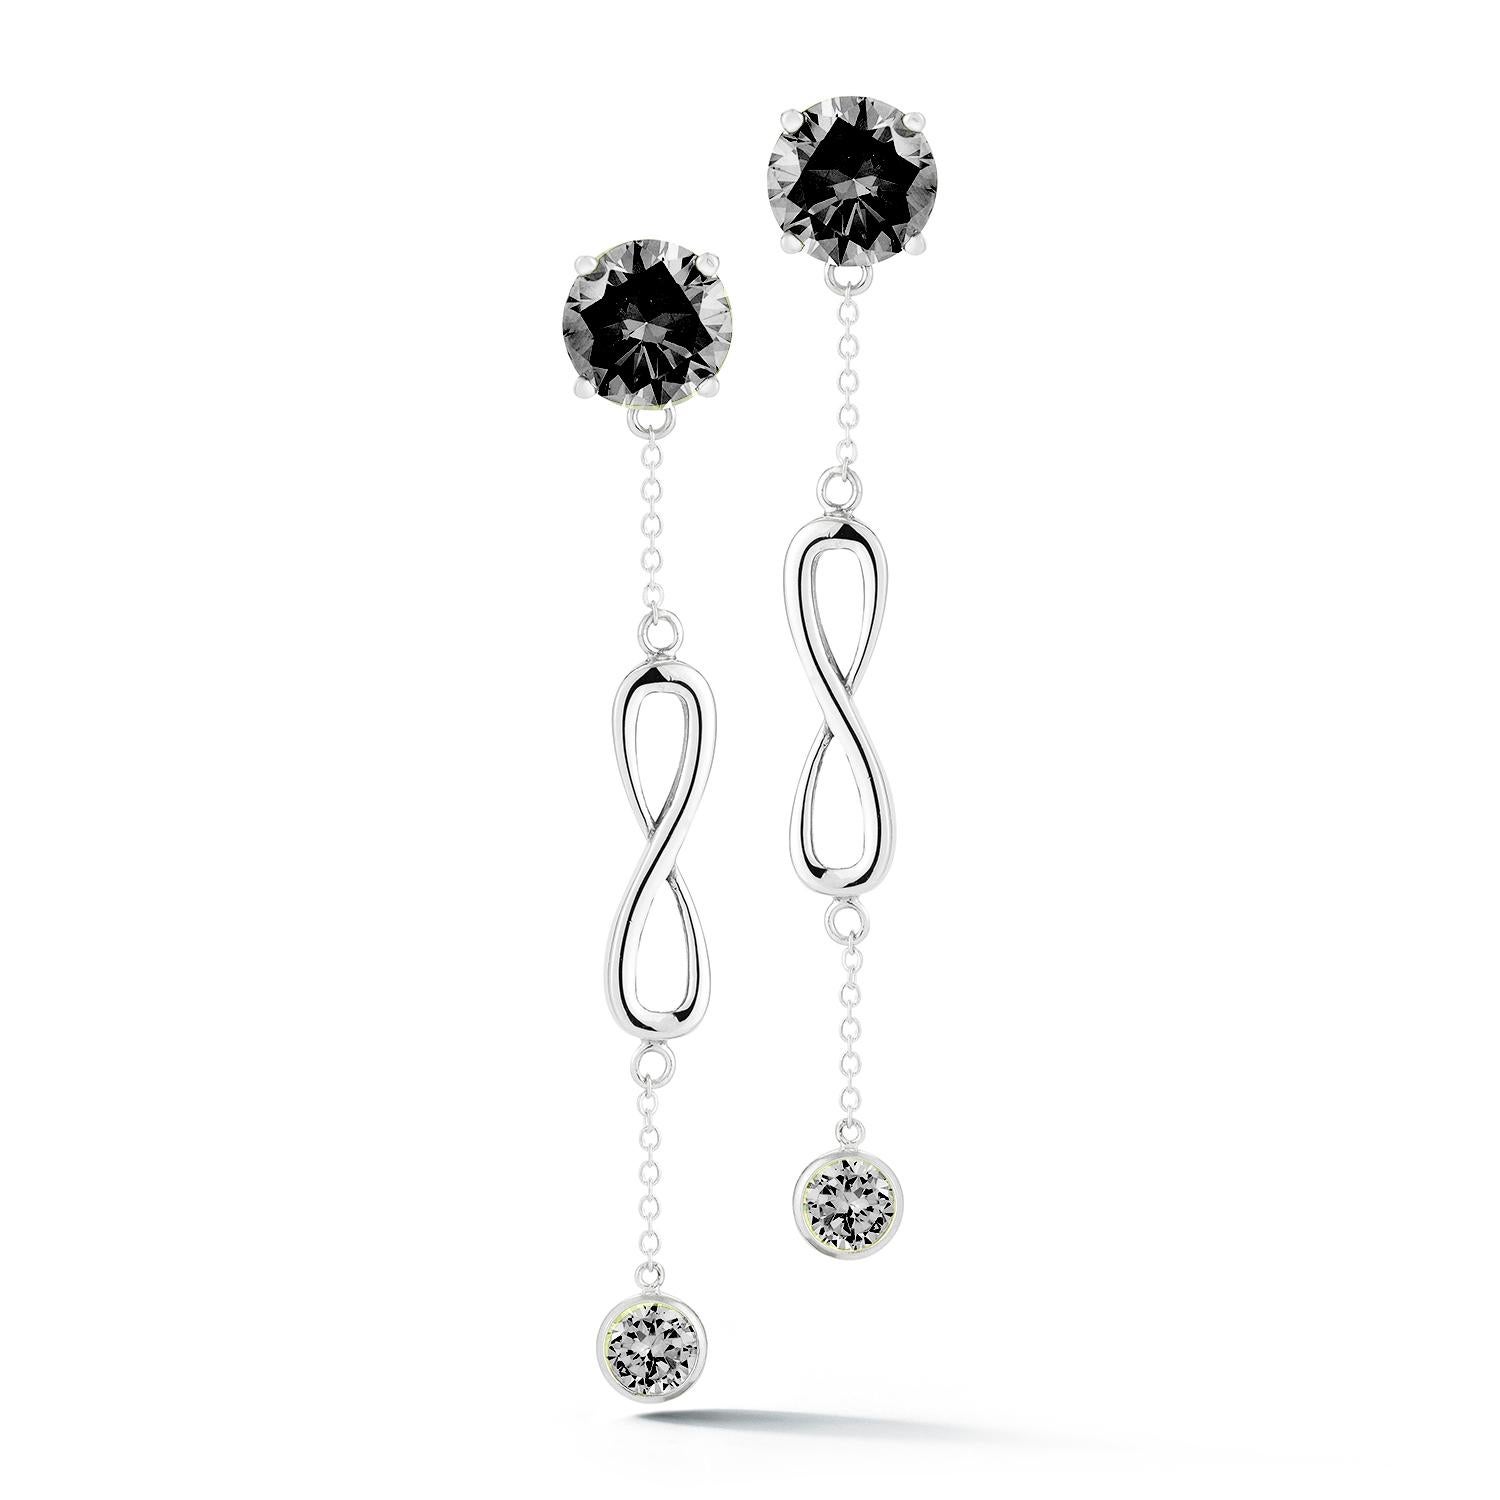 infinity stones earrings